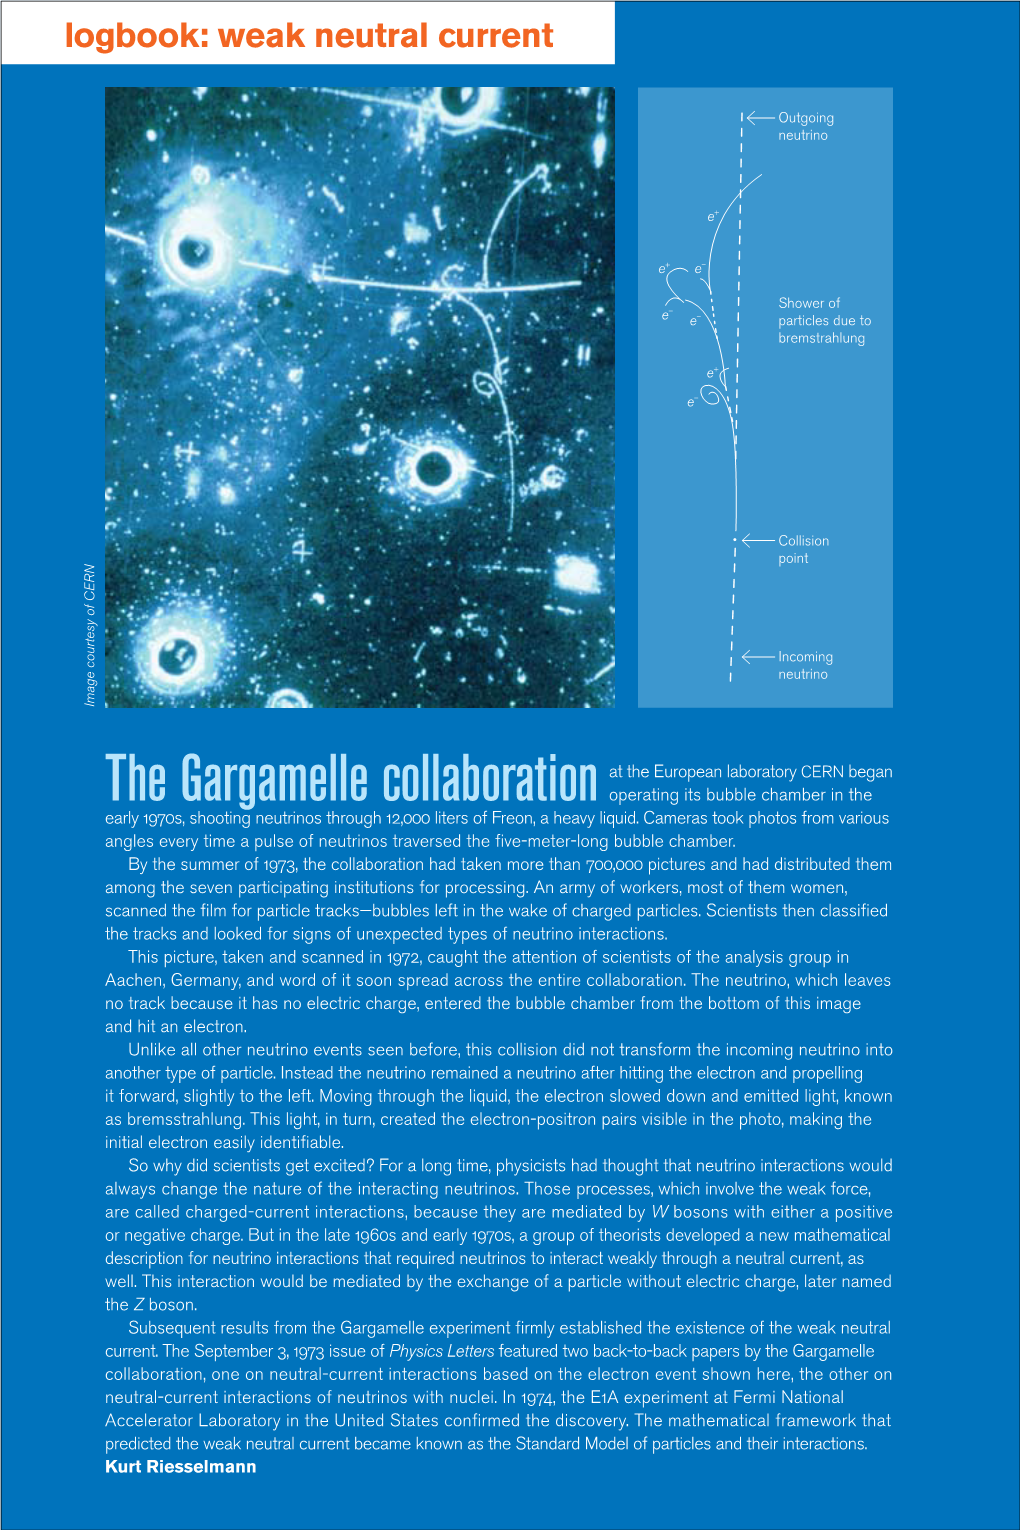 The Gargamelle Collaborationat the European Laboratory CERN Began